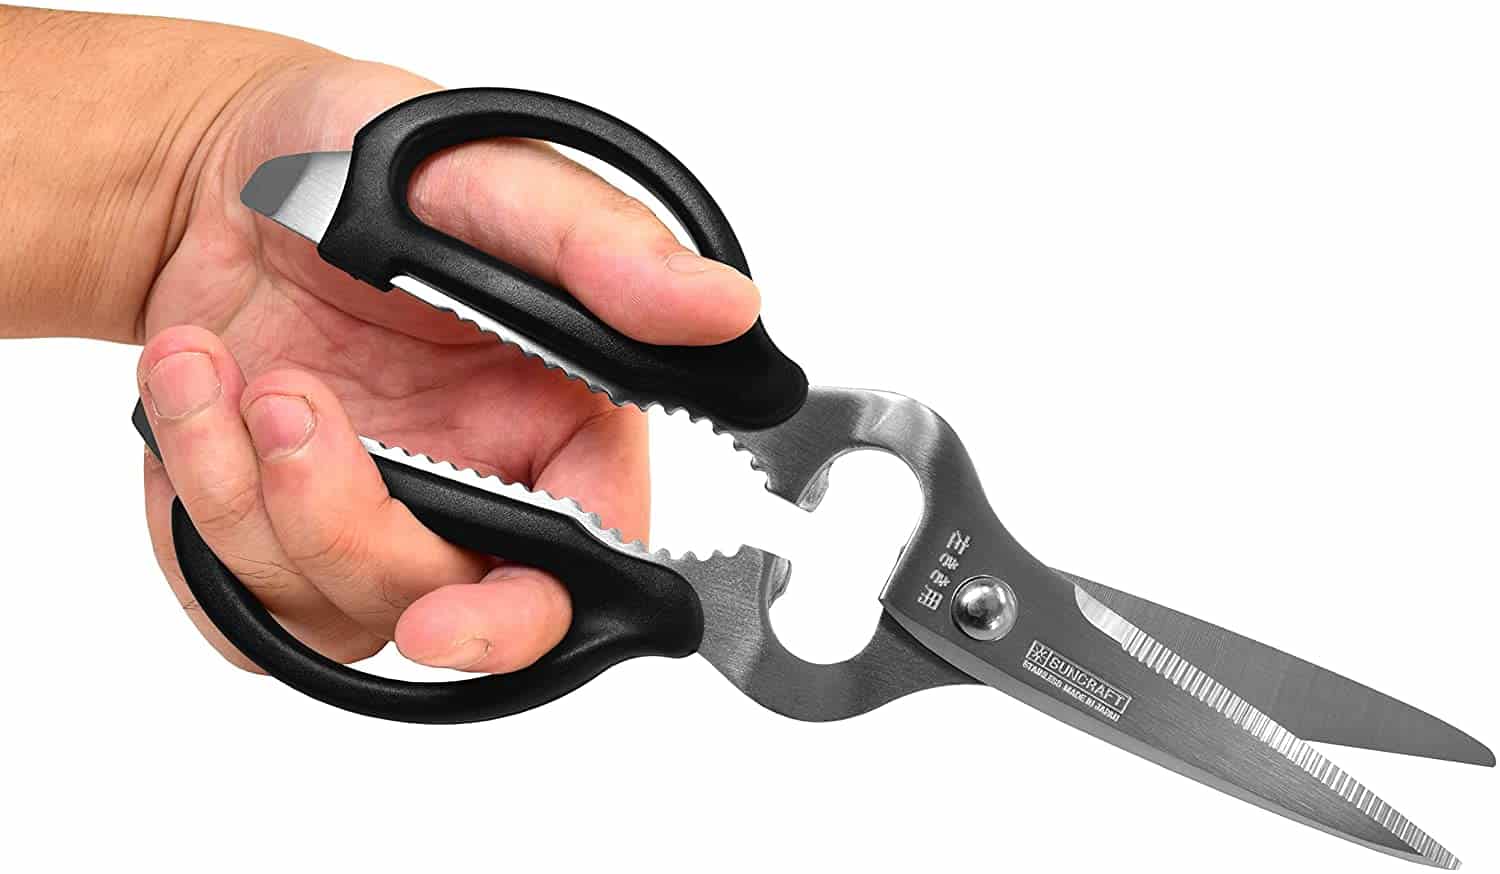 Best for left-handed people- Seki Stainless Steel Blade Soft Grip for Left-handed holding scissors